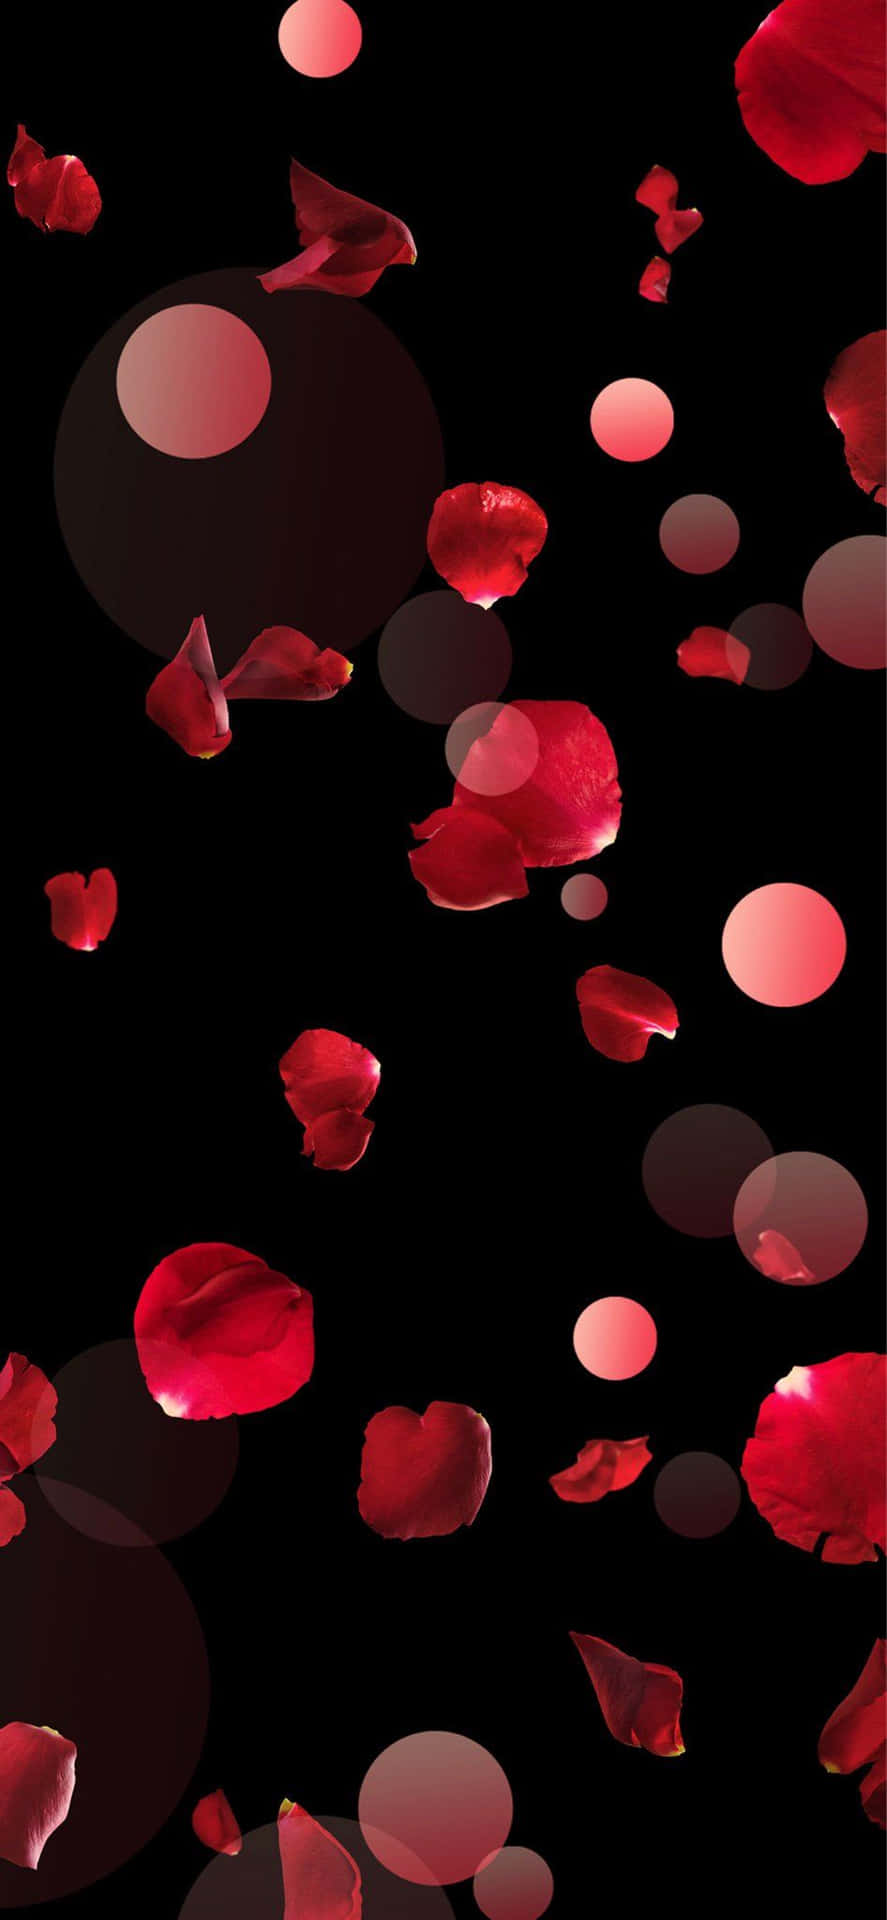 Eloquent Red Rose Petal on a Subtle Background Wallpaper